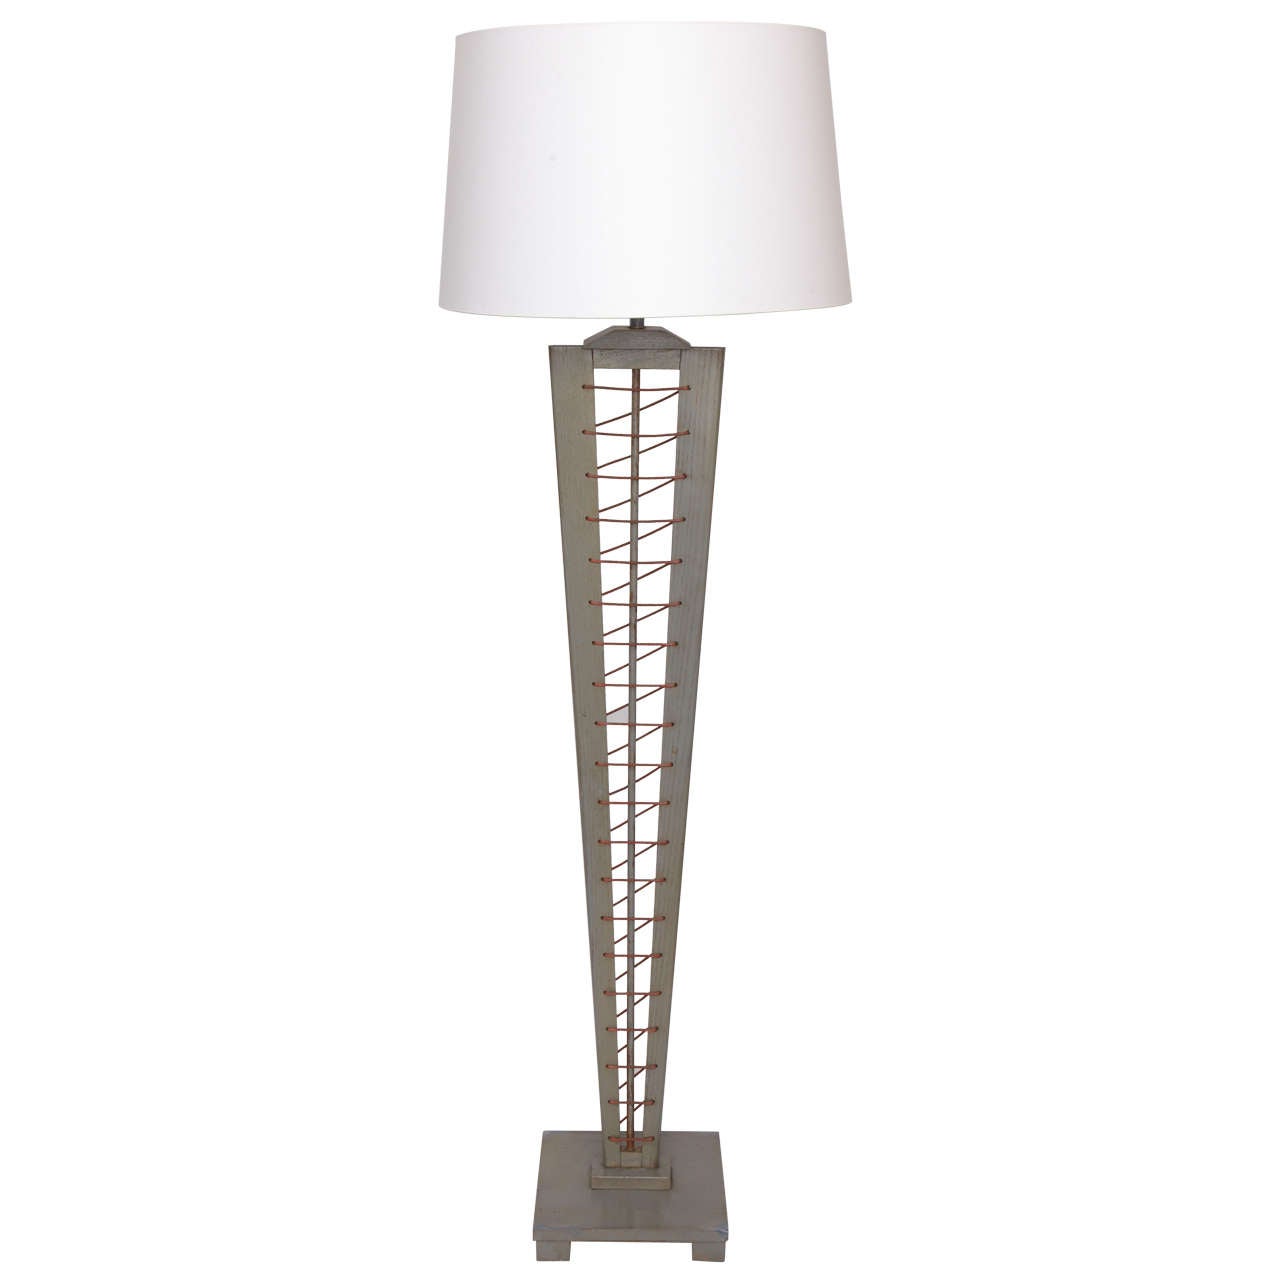 1940s Art Moderne Architectural Floor Lamp